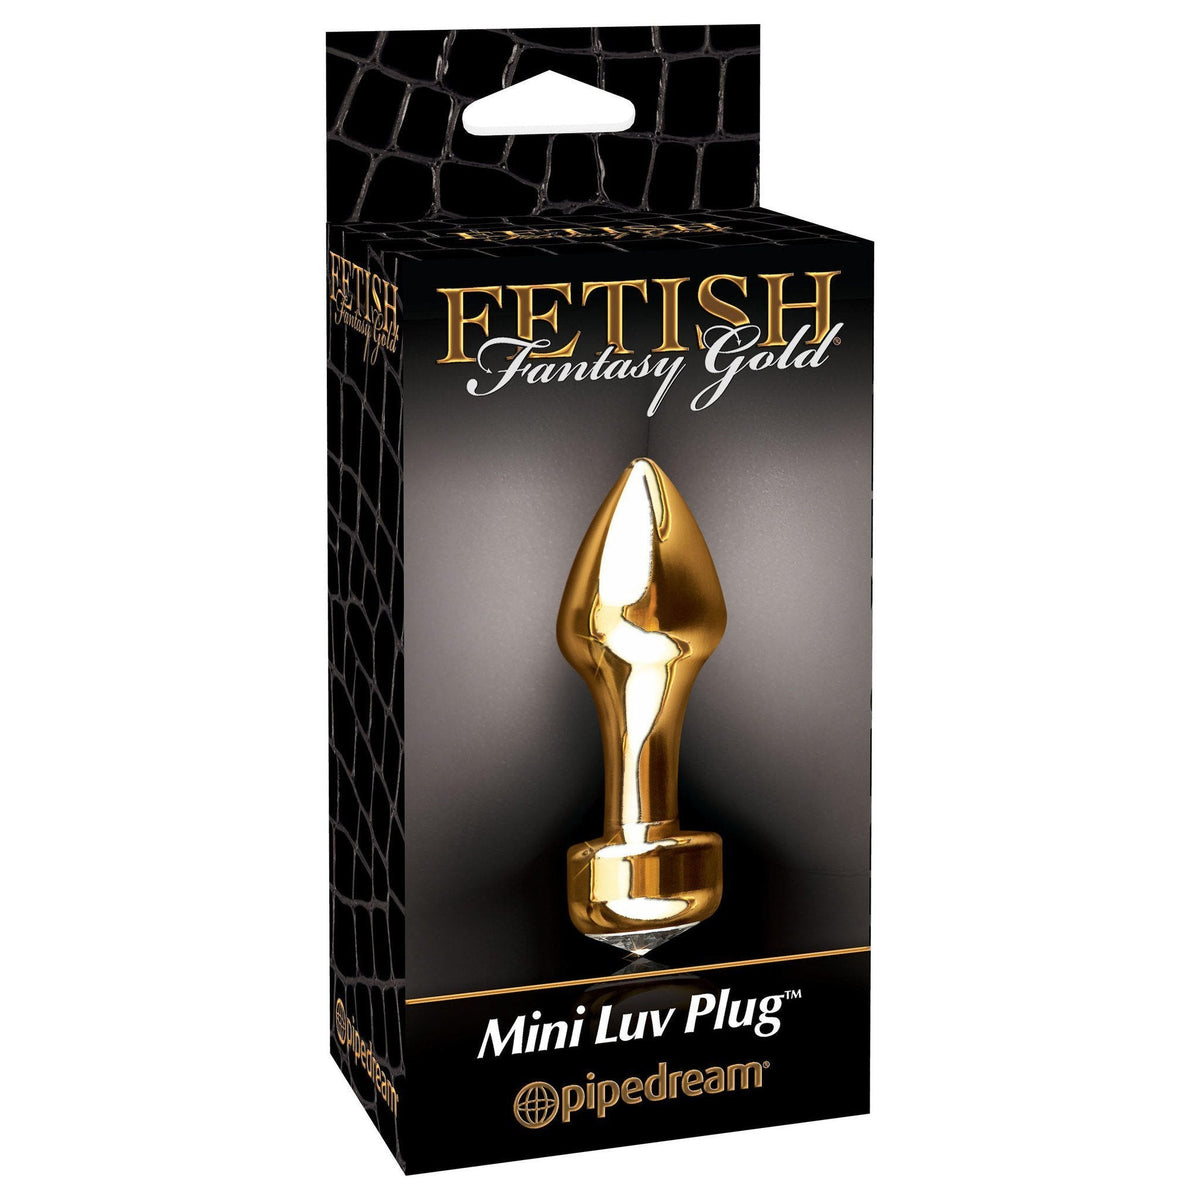 Pipedream - Fetish Fantasy Gold Mini Luv Plug (Gold) -  Anal Plug (Non Vibration)  Durio.sg